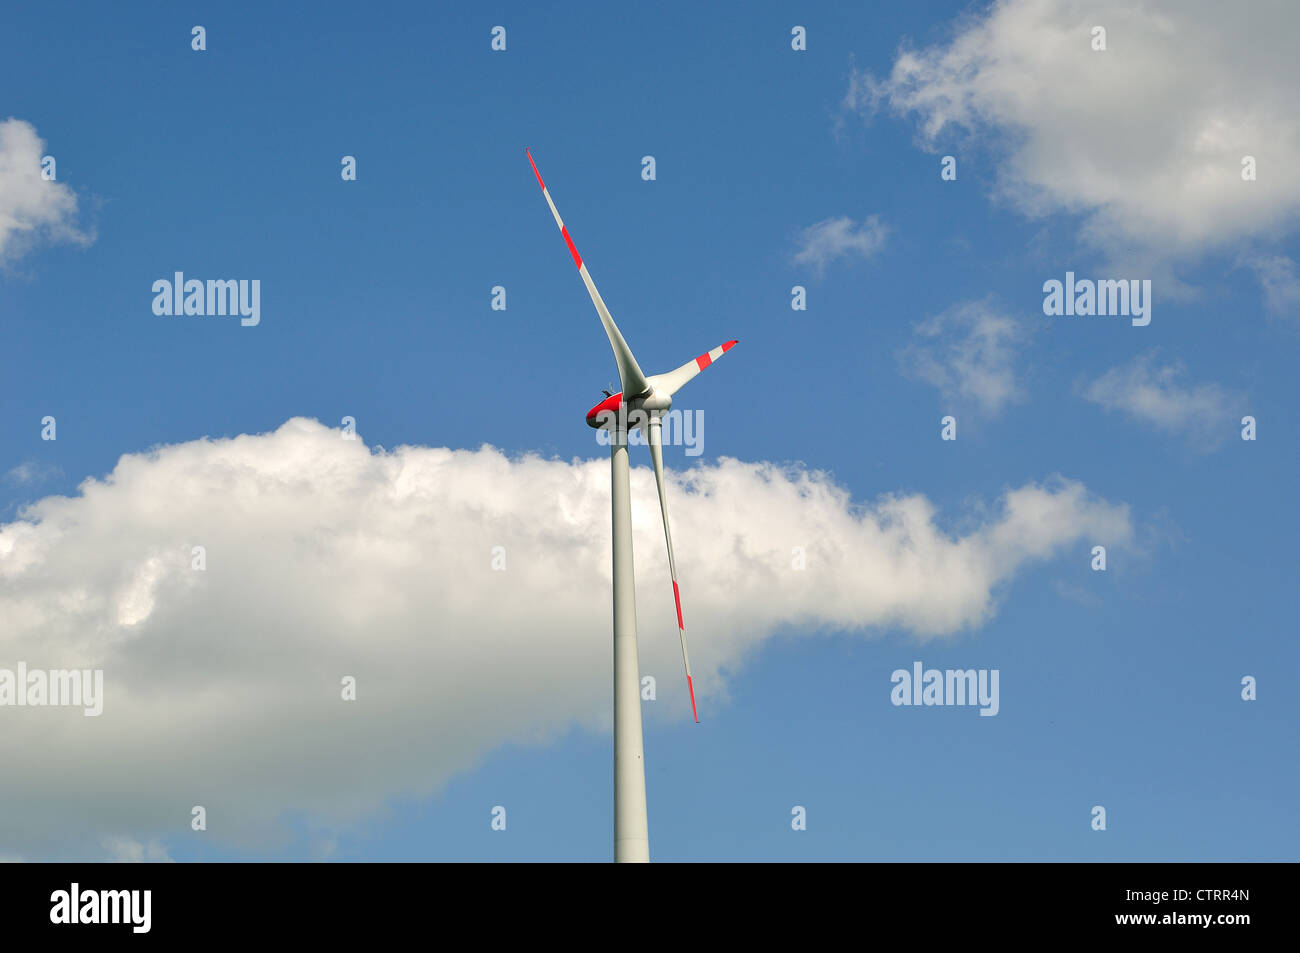 Wind turbine contre le ciel bleu. Banque D'Images